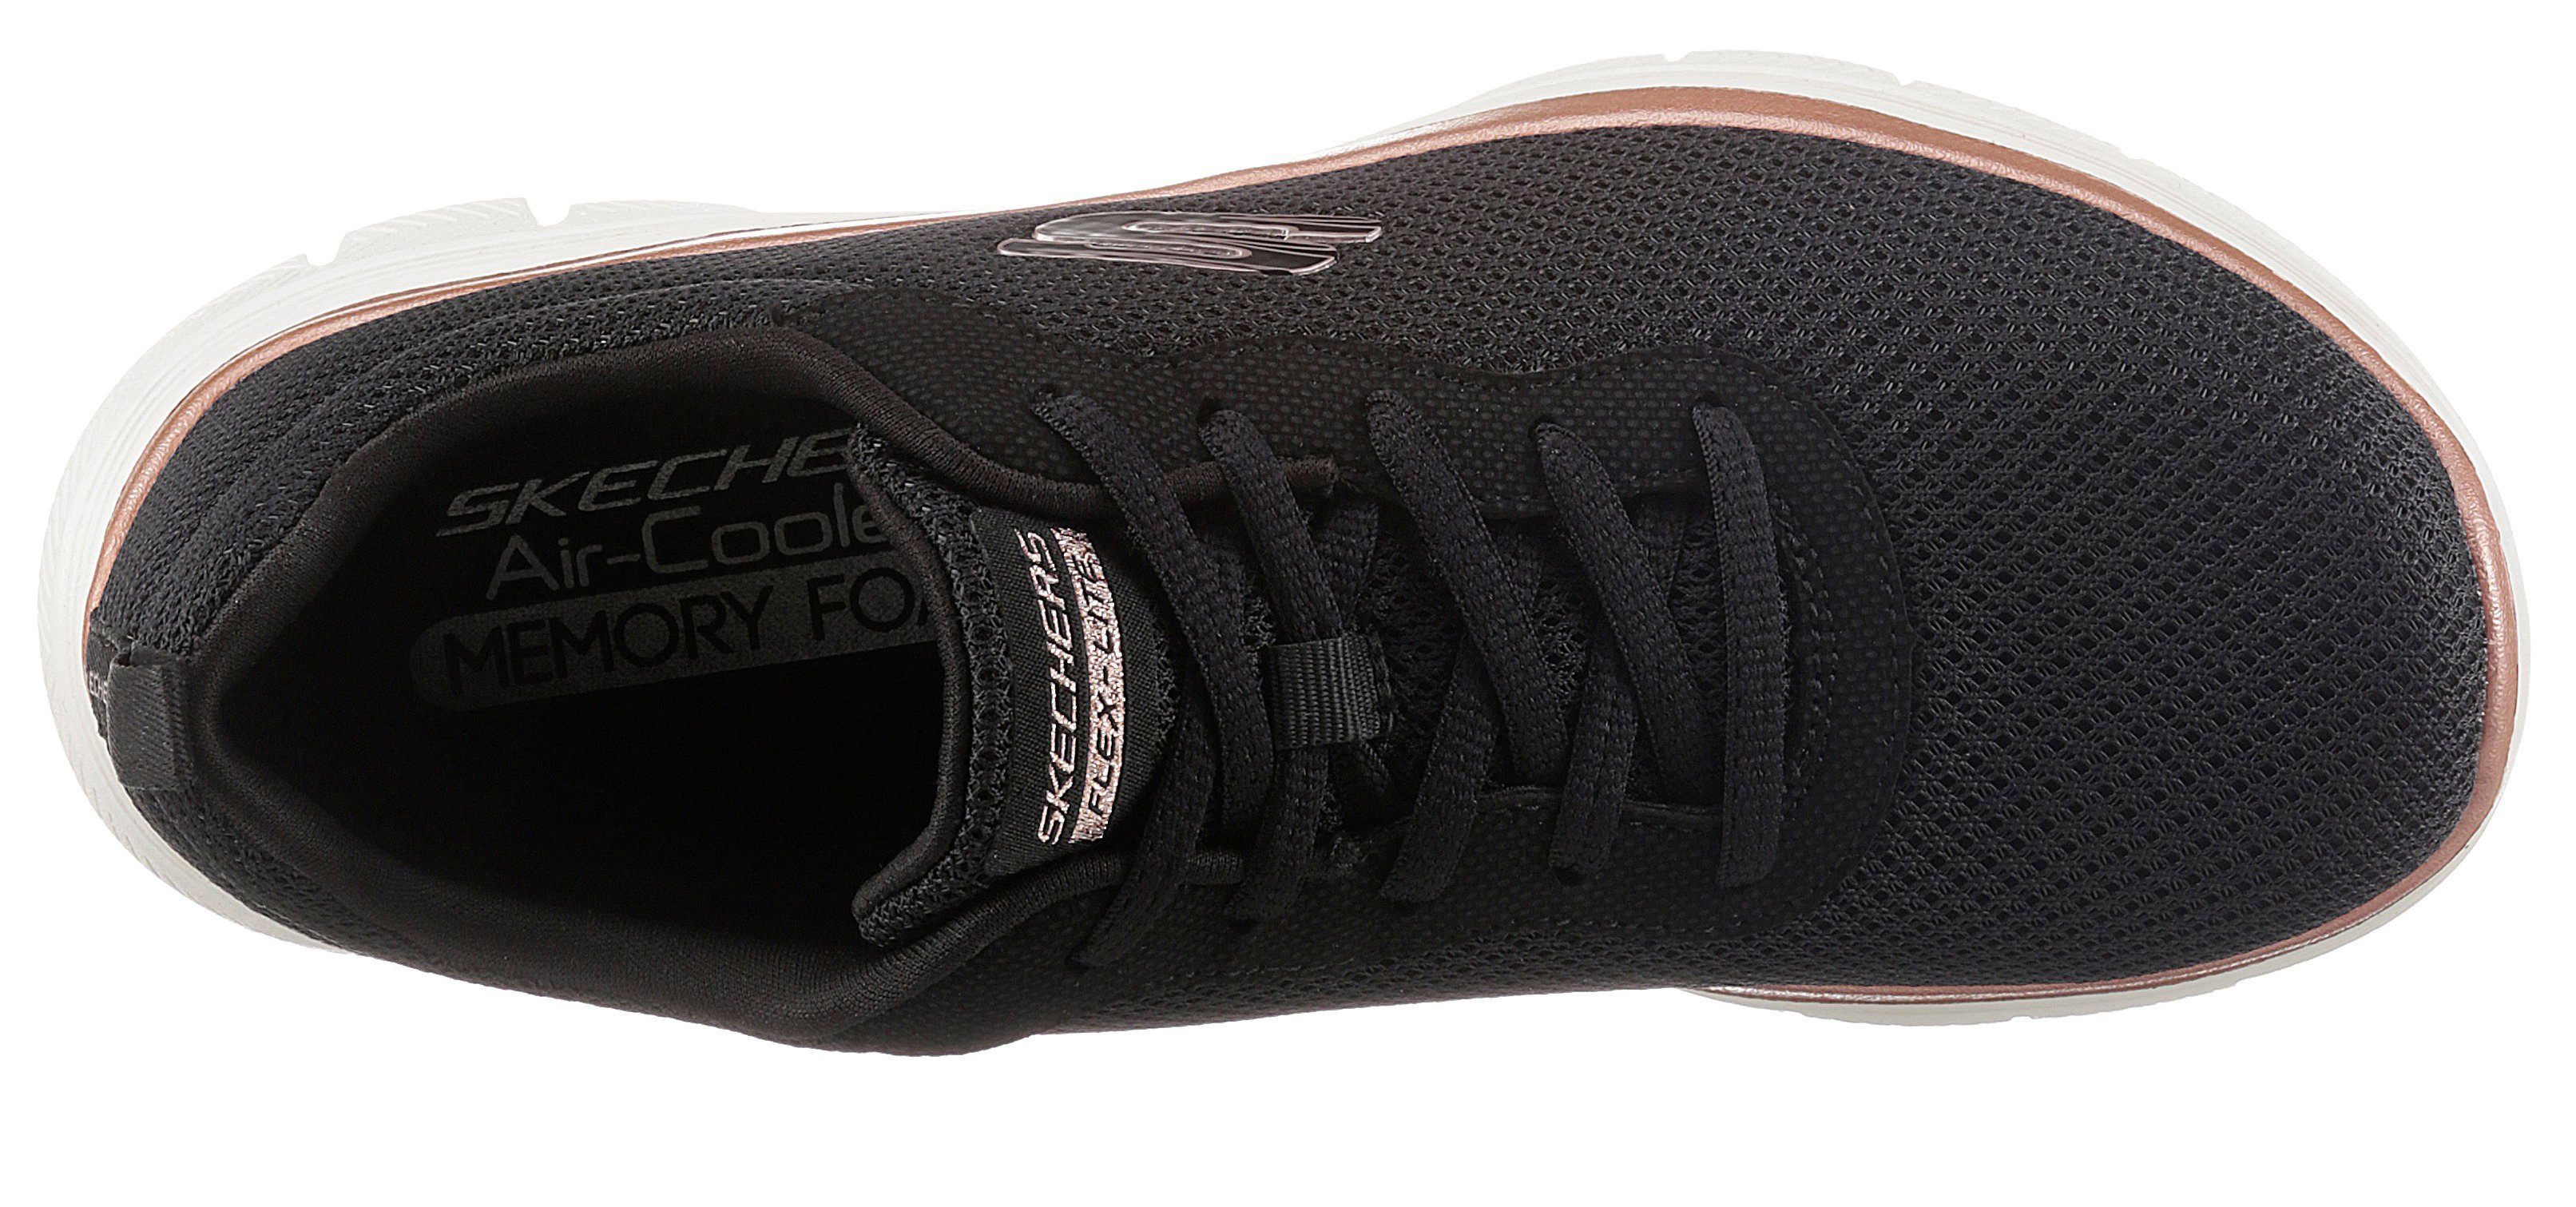 schwarz-rosé 4.0 APPEAL Memory FLEX BRILLINAT VIEW Skechers mit Ausstattung Foam Sneaker Air-Cooled